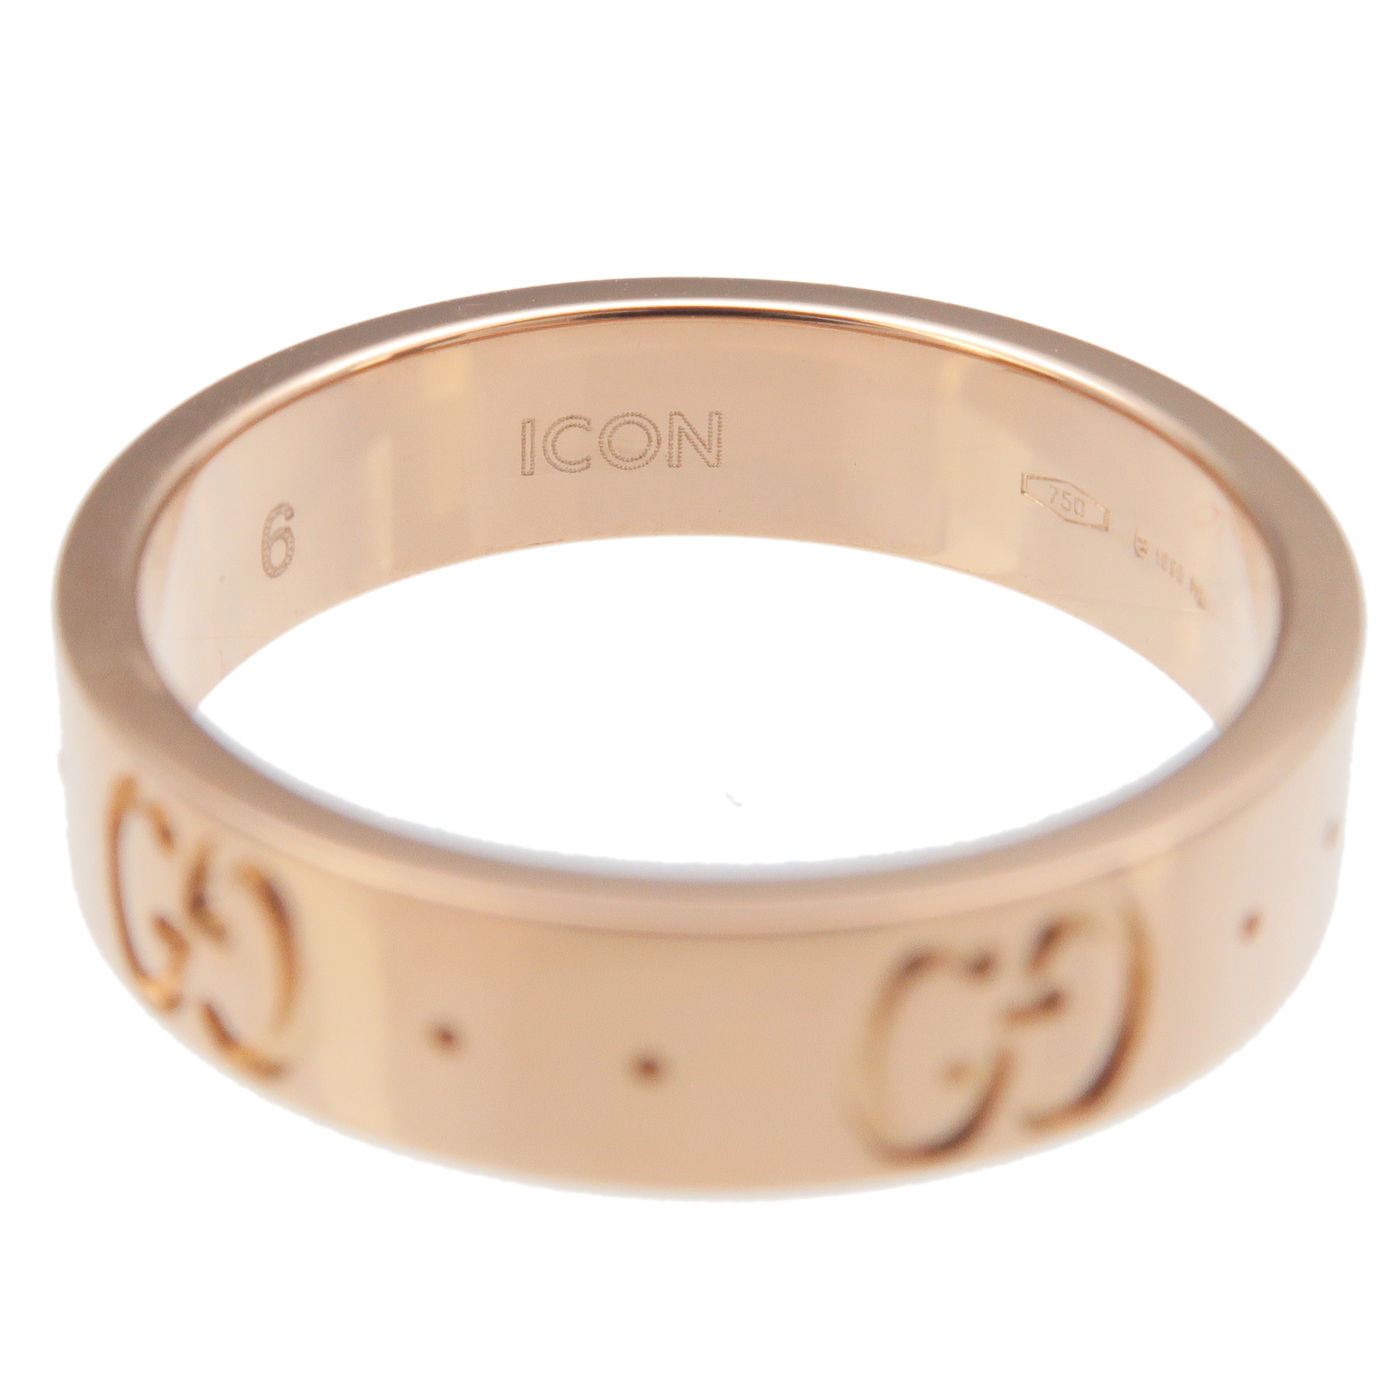 GUCCI Icon Ring K18PG 750PG Rose Gold #6 US3.5-4 HK7.5 EU46